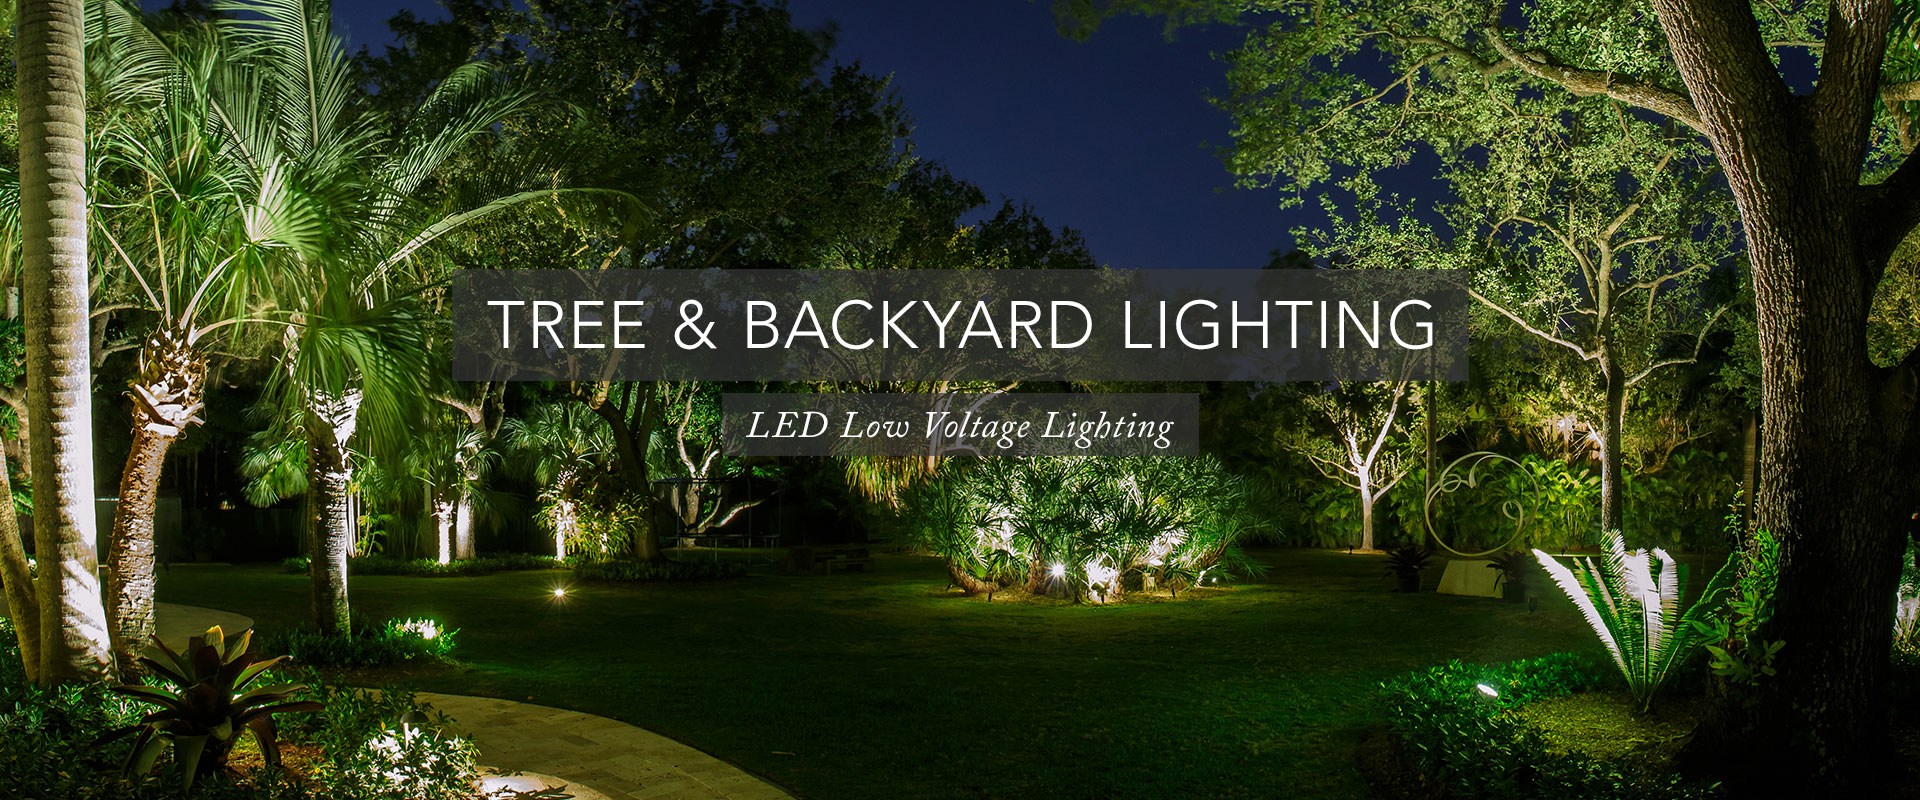 Tree & Backyard Landscape Lighting Hero-5